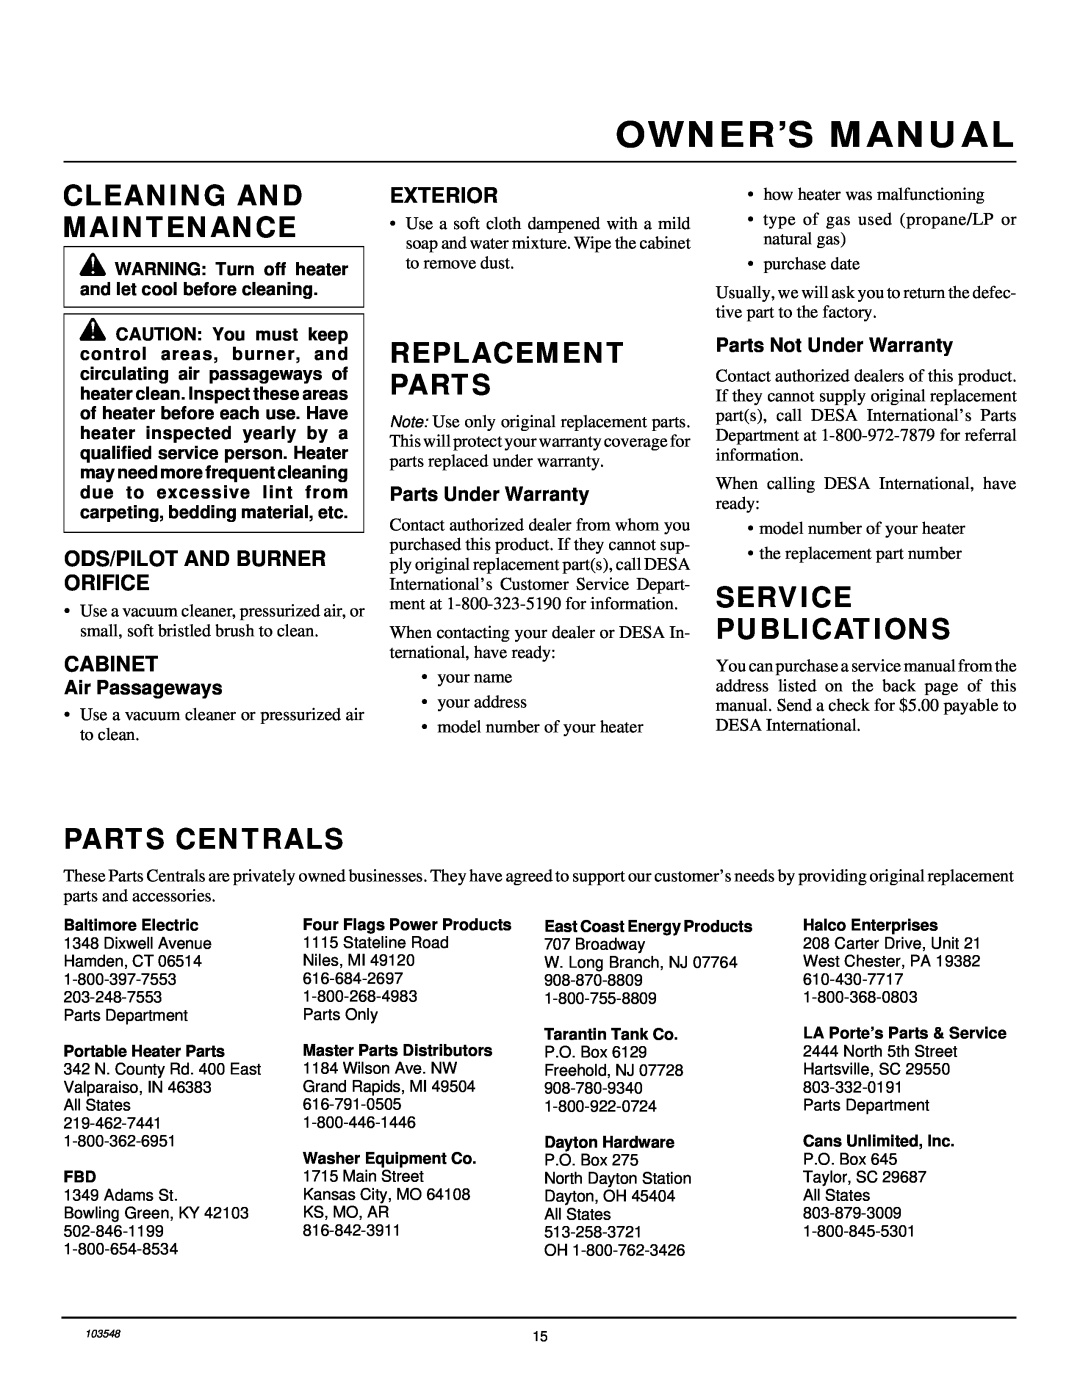 Desa CGP10RL Cleaning And Maintenance, Replacement Parts, Service Publications, Parts Centrals, Air Passageways 